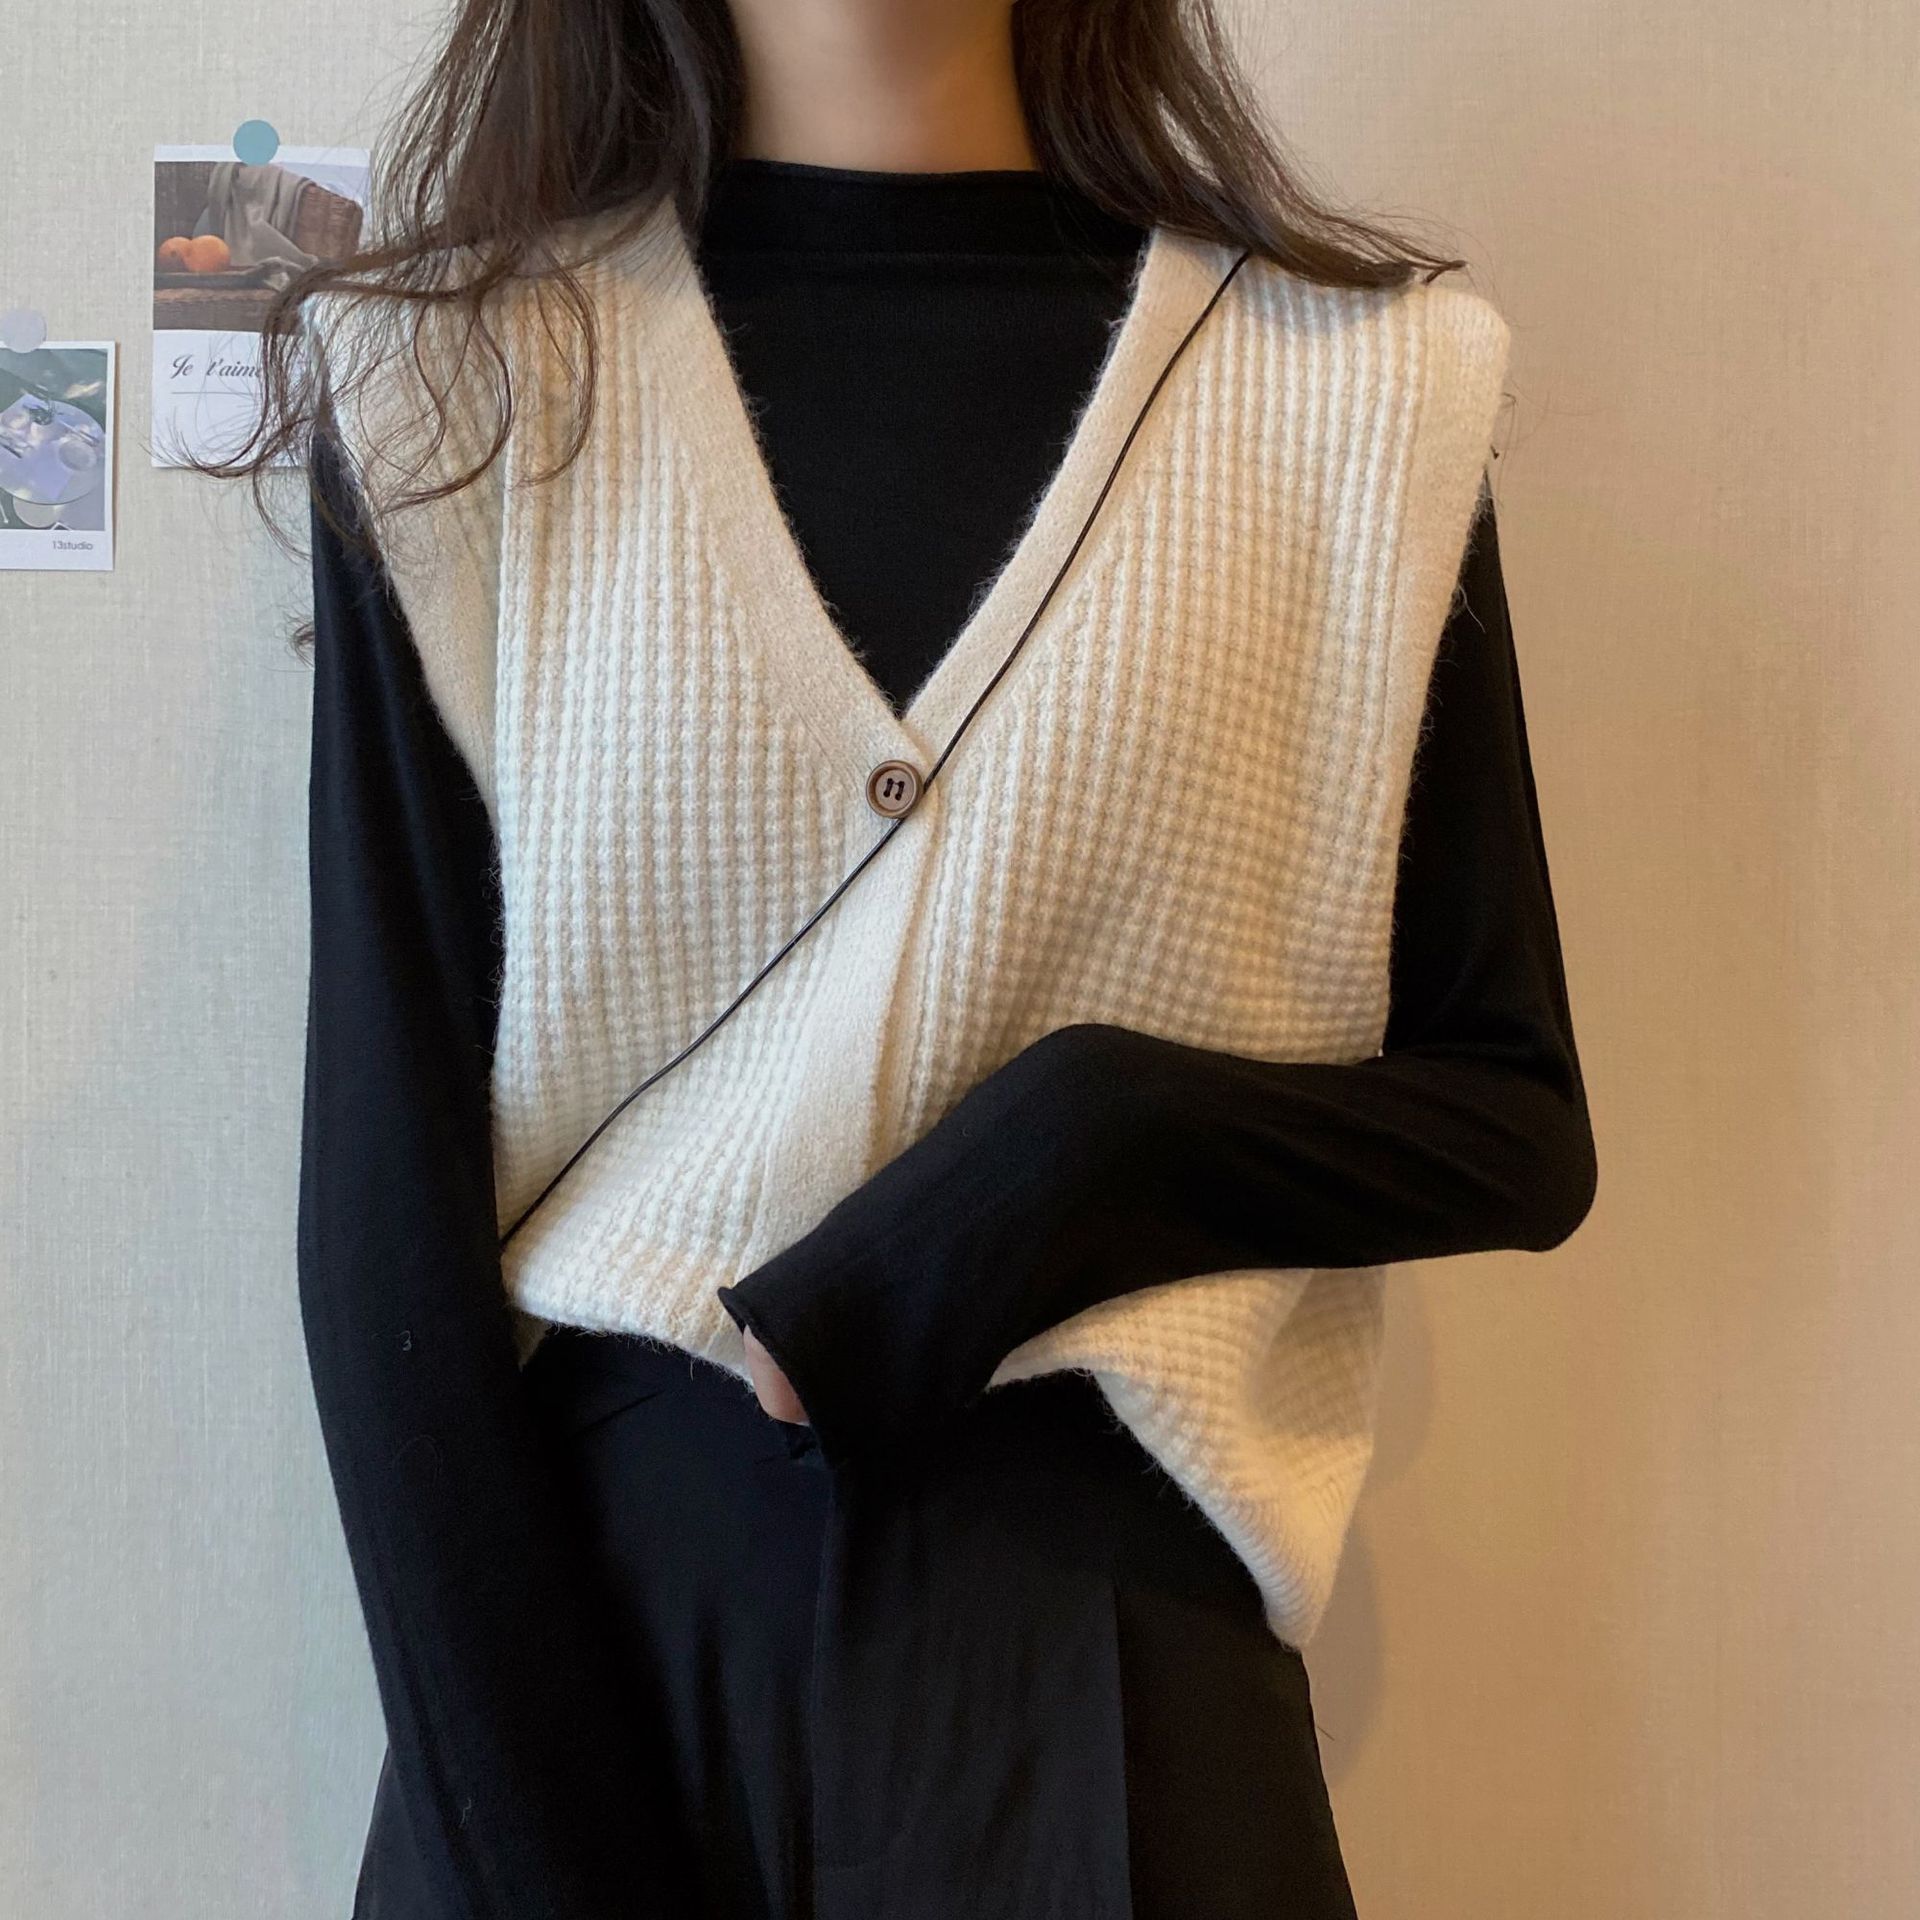 Design Sense Knitted Vest Coat Women's Autumn and Winter 2020 New Korean-Style Fashionable Sweater Autumn Sleeveless Top